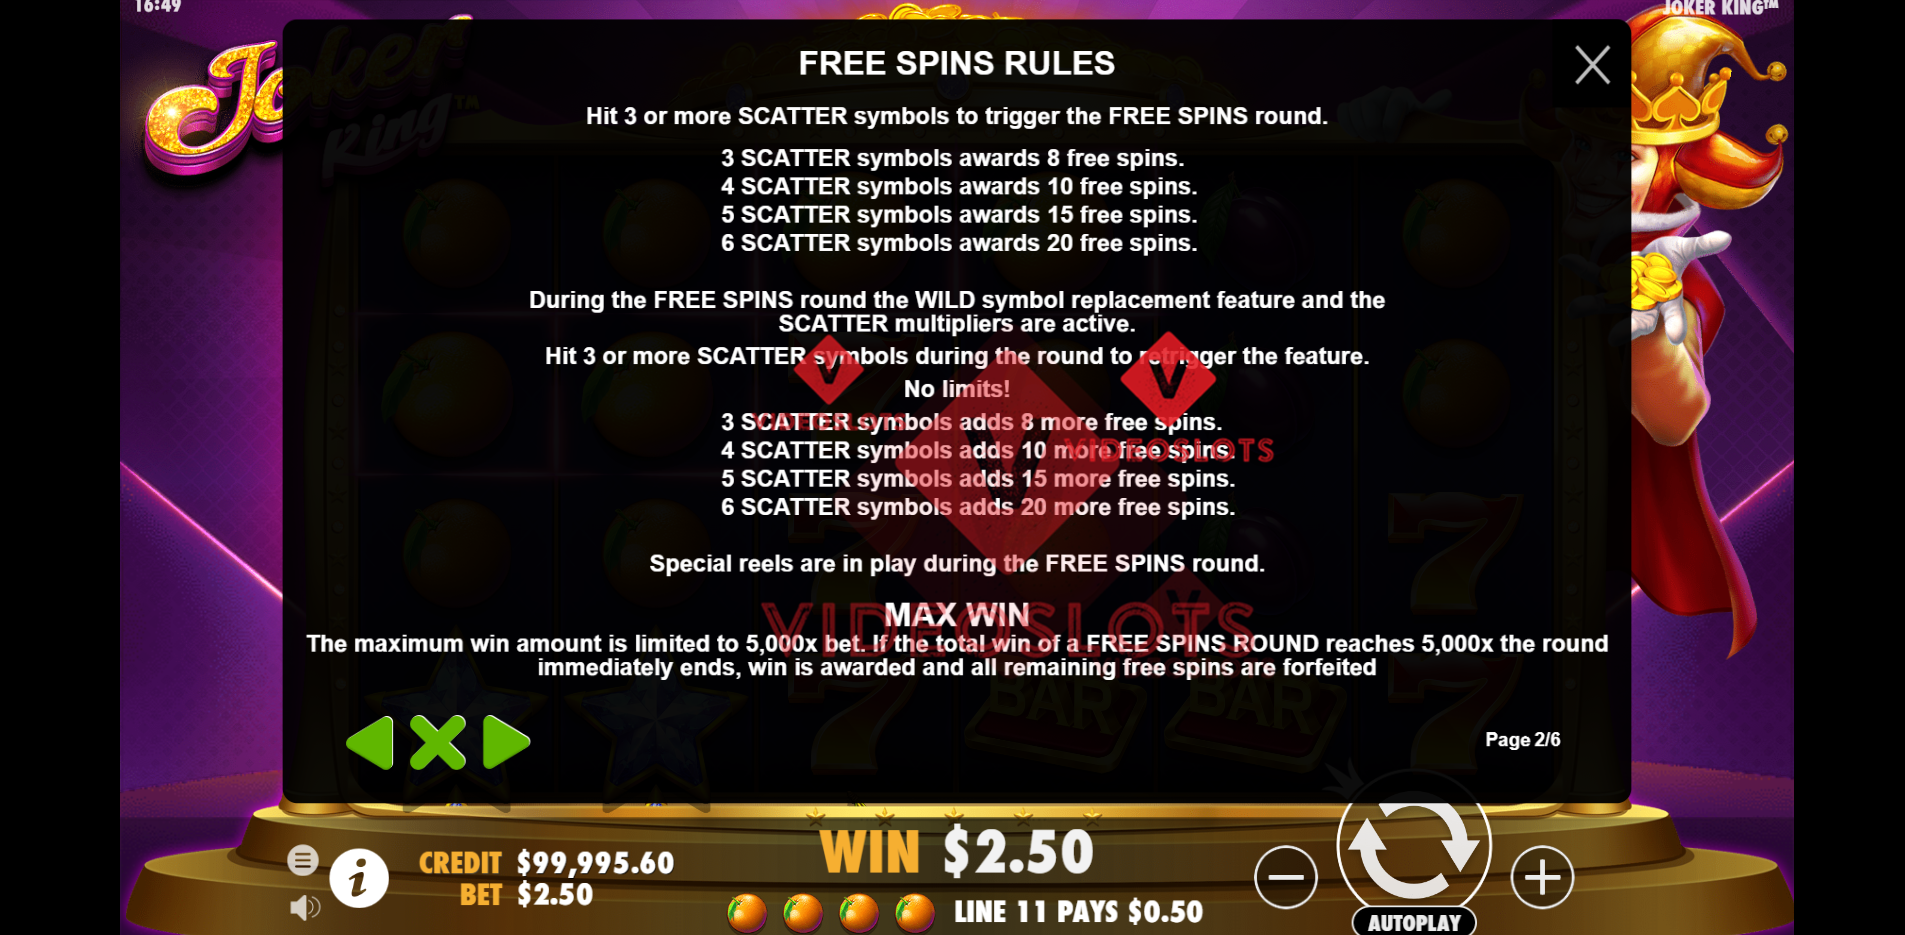 Game Rules for Joker King slot by Pragmatic Play